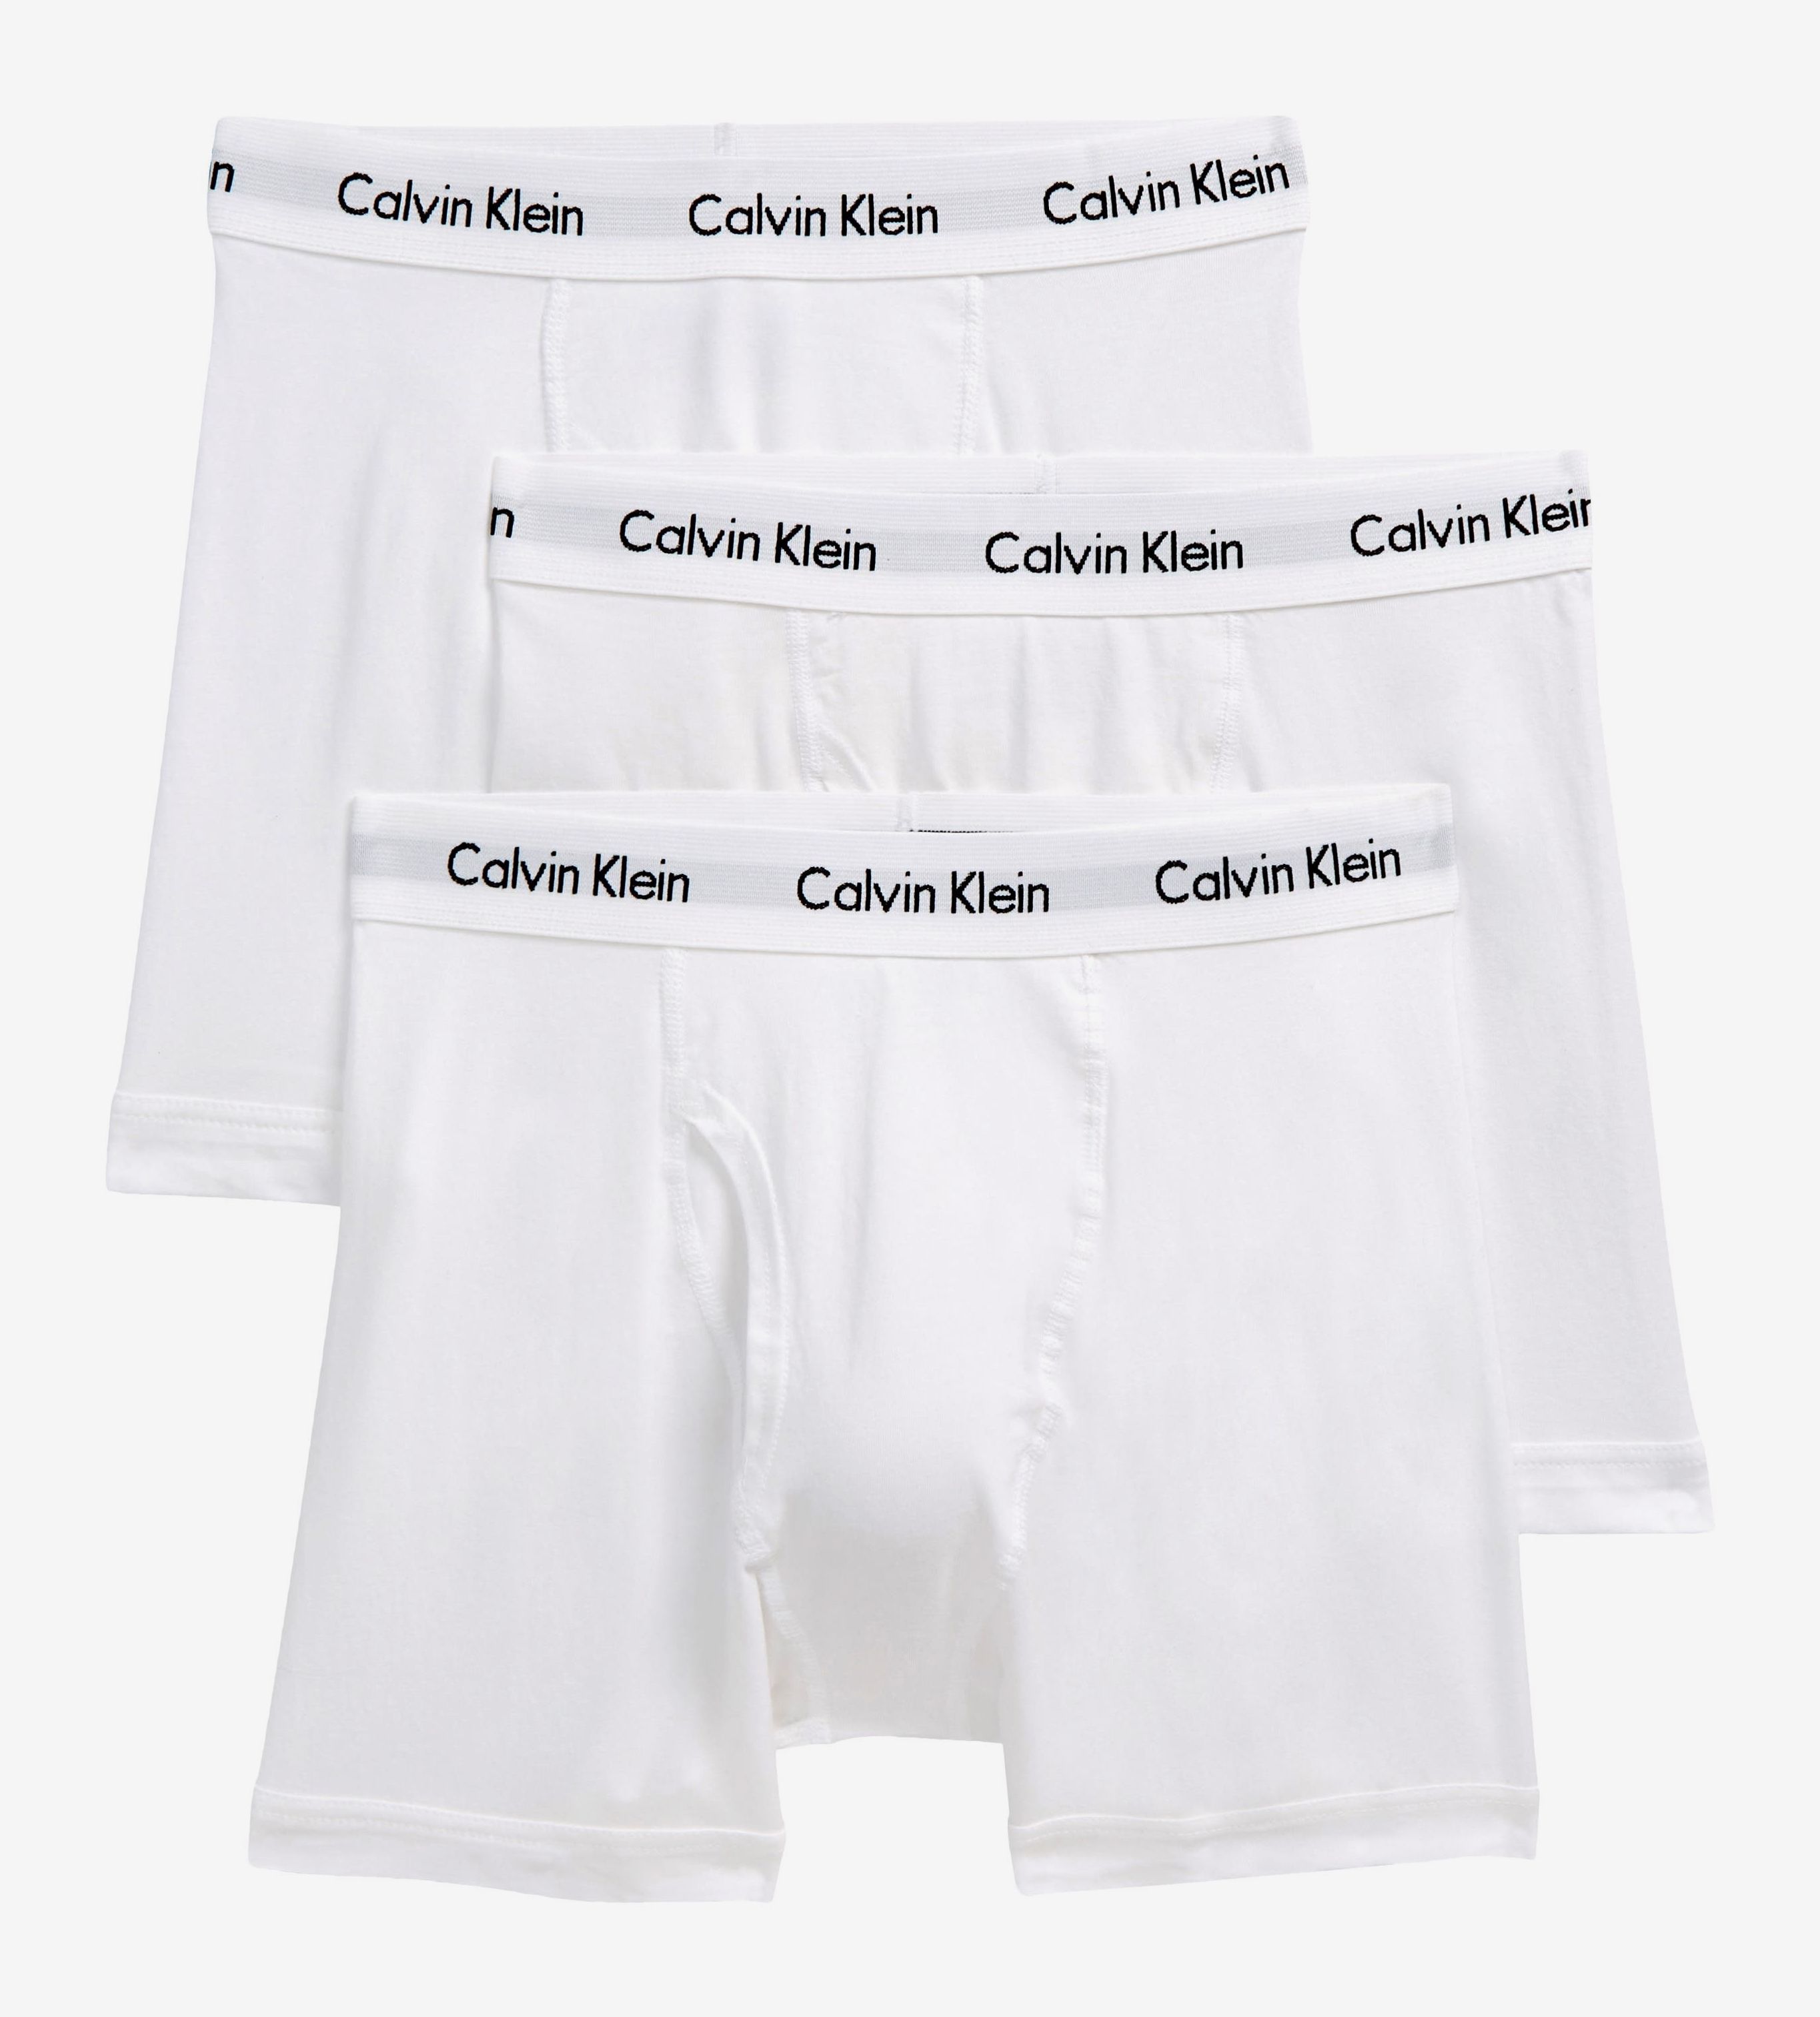 BEST Louis Vuitton Men Underwear • Shirtnation - Shop trending t